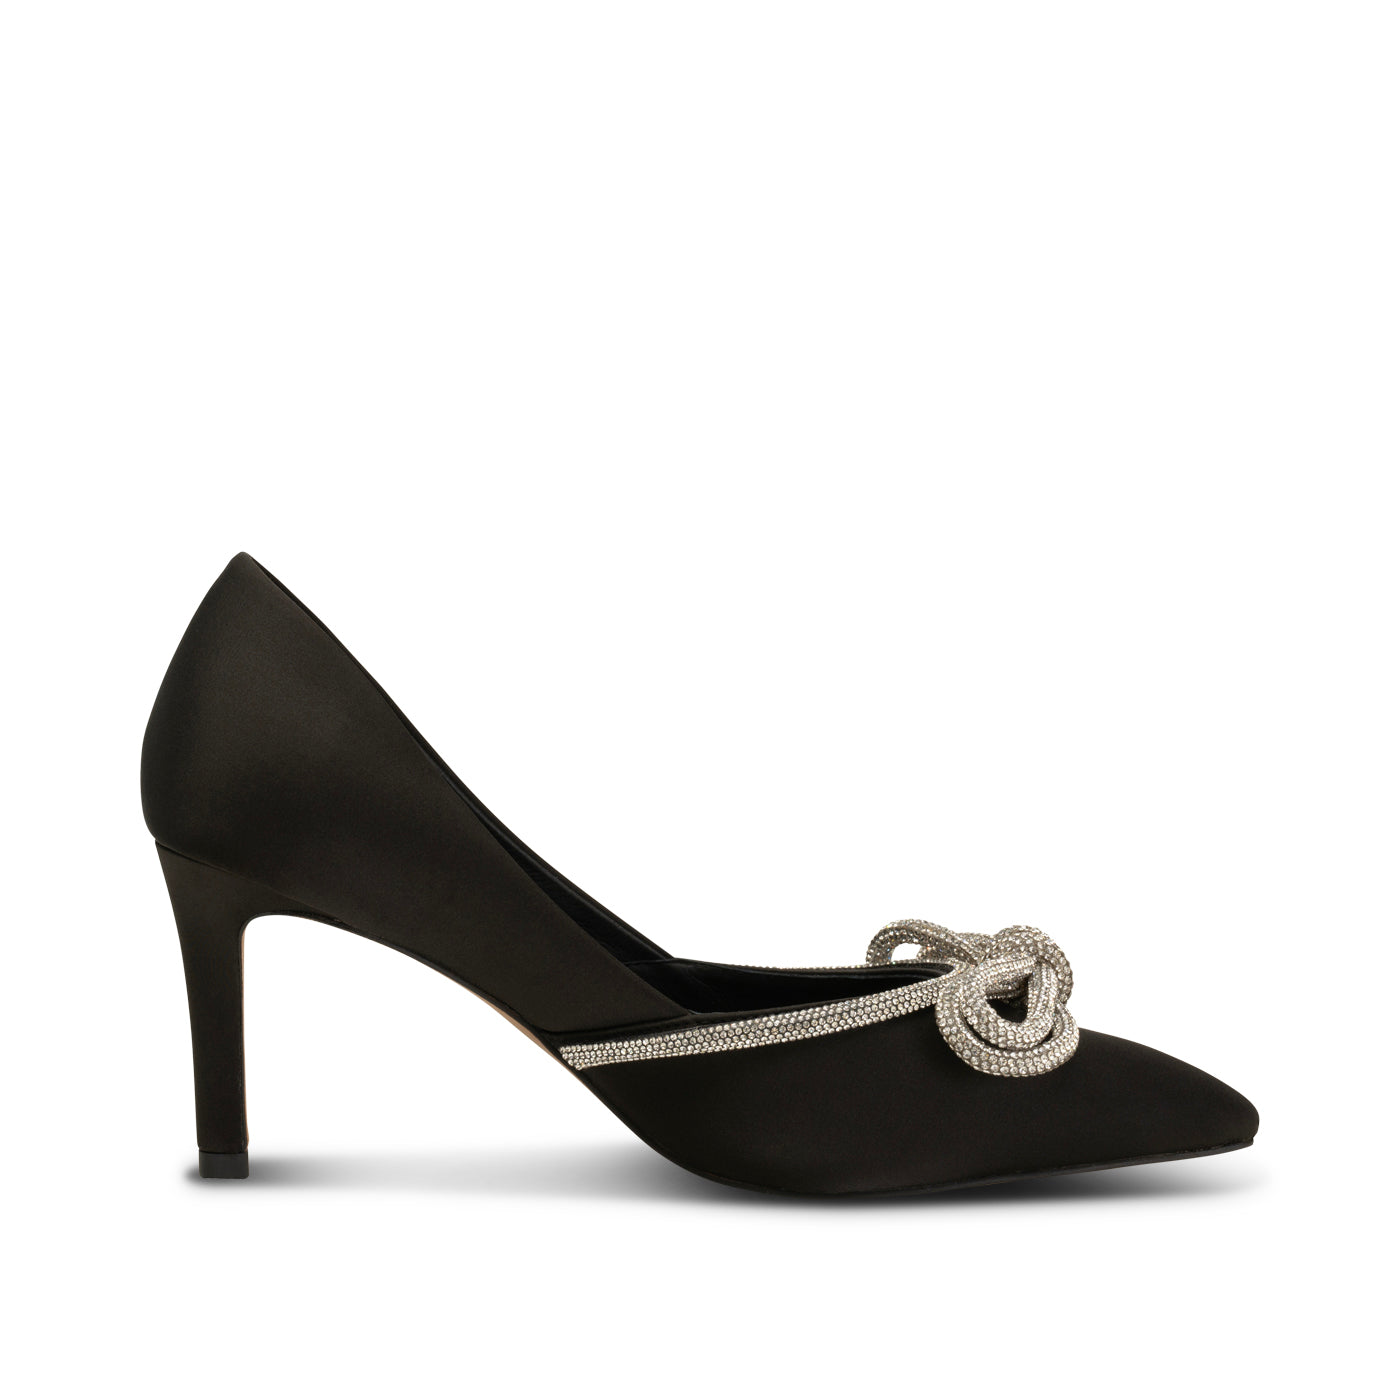 Cute Black Bow High Heels Fashion Shoes · KoKo Fashion · Online Store  Powered by Storenvy